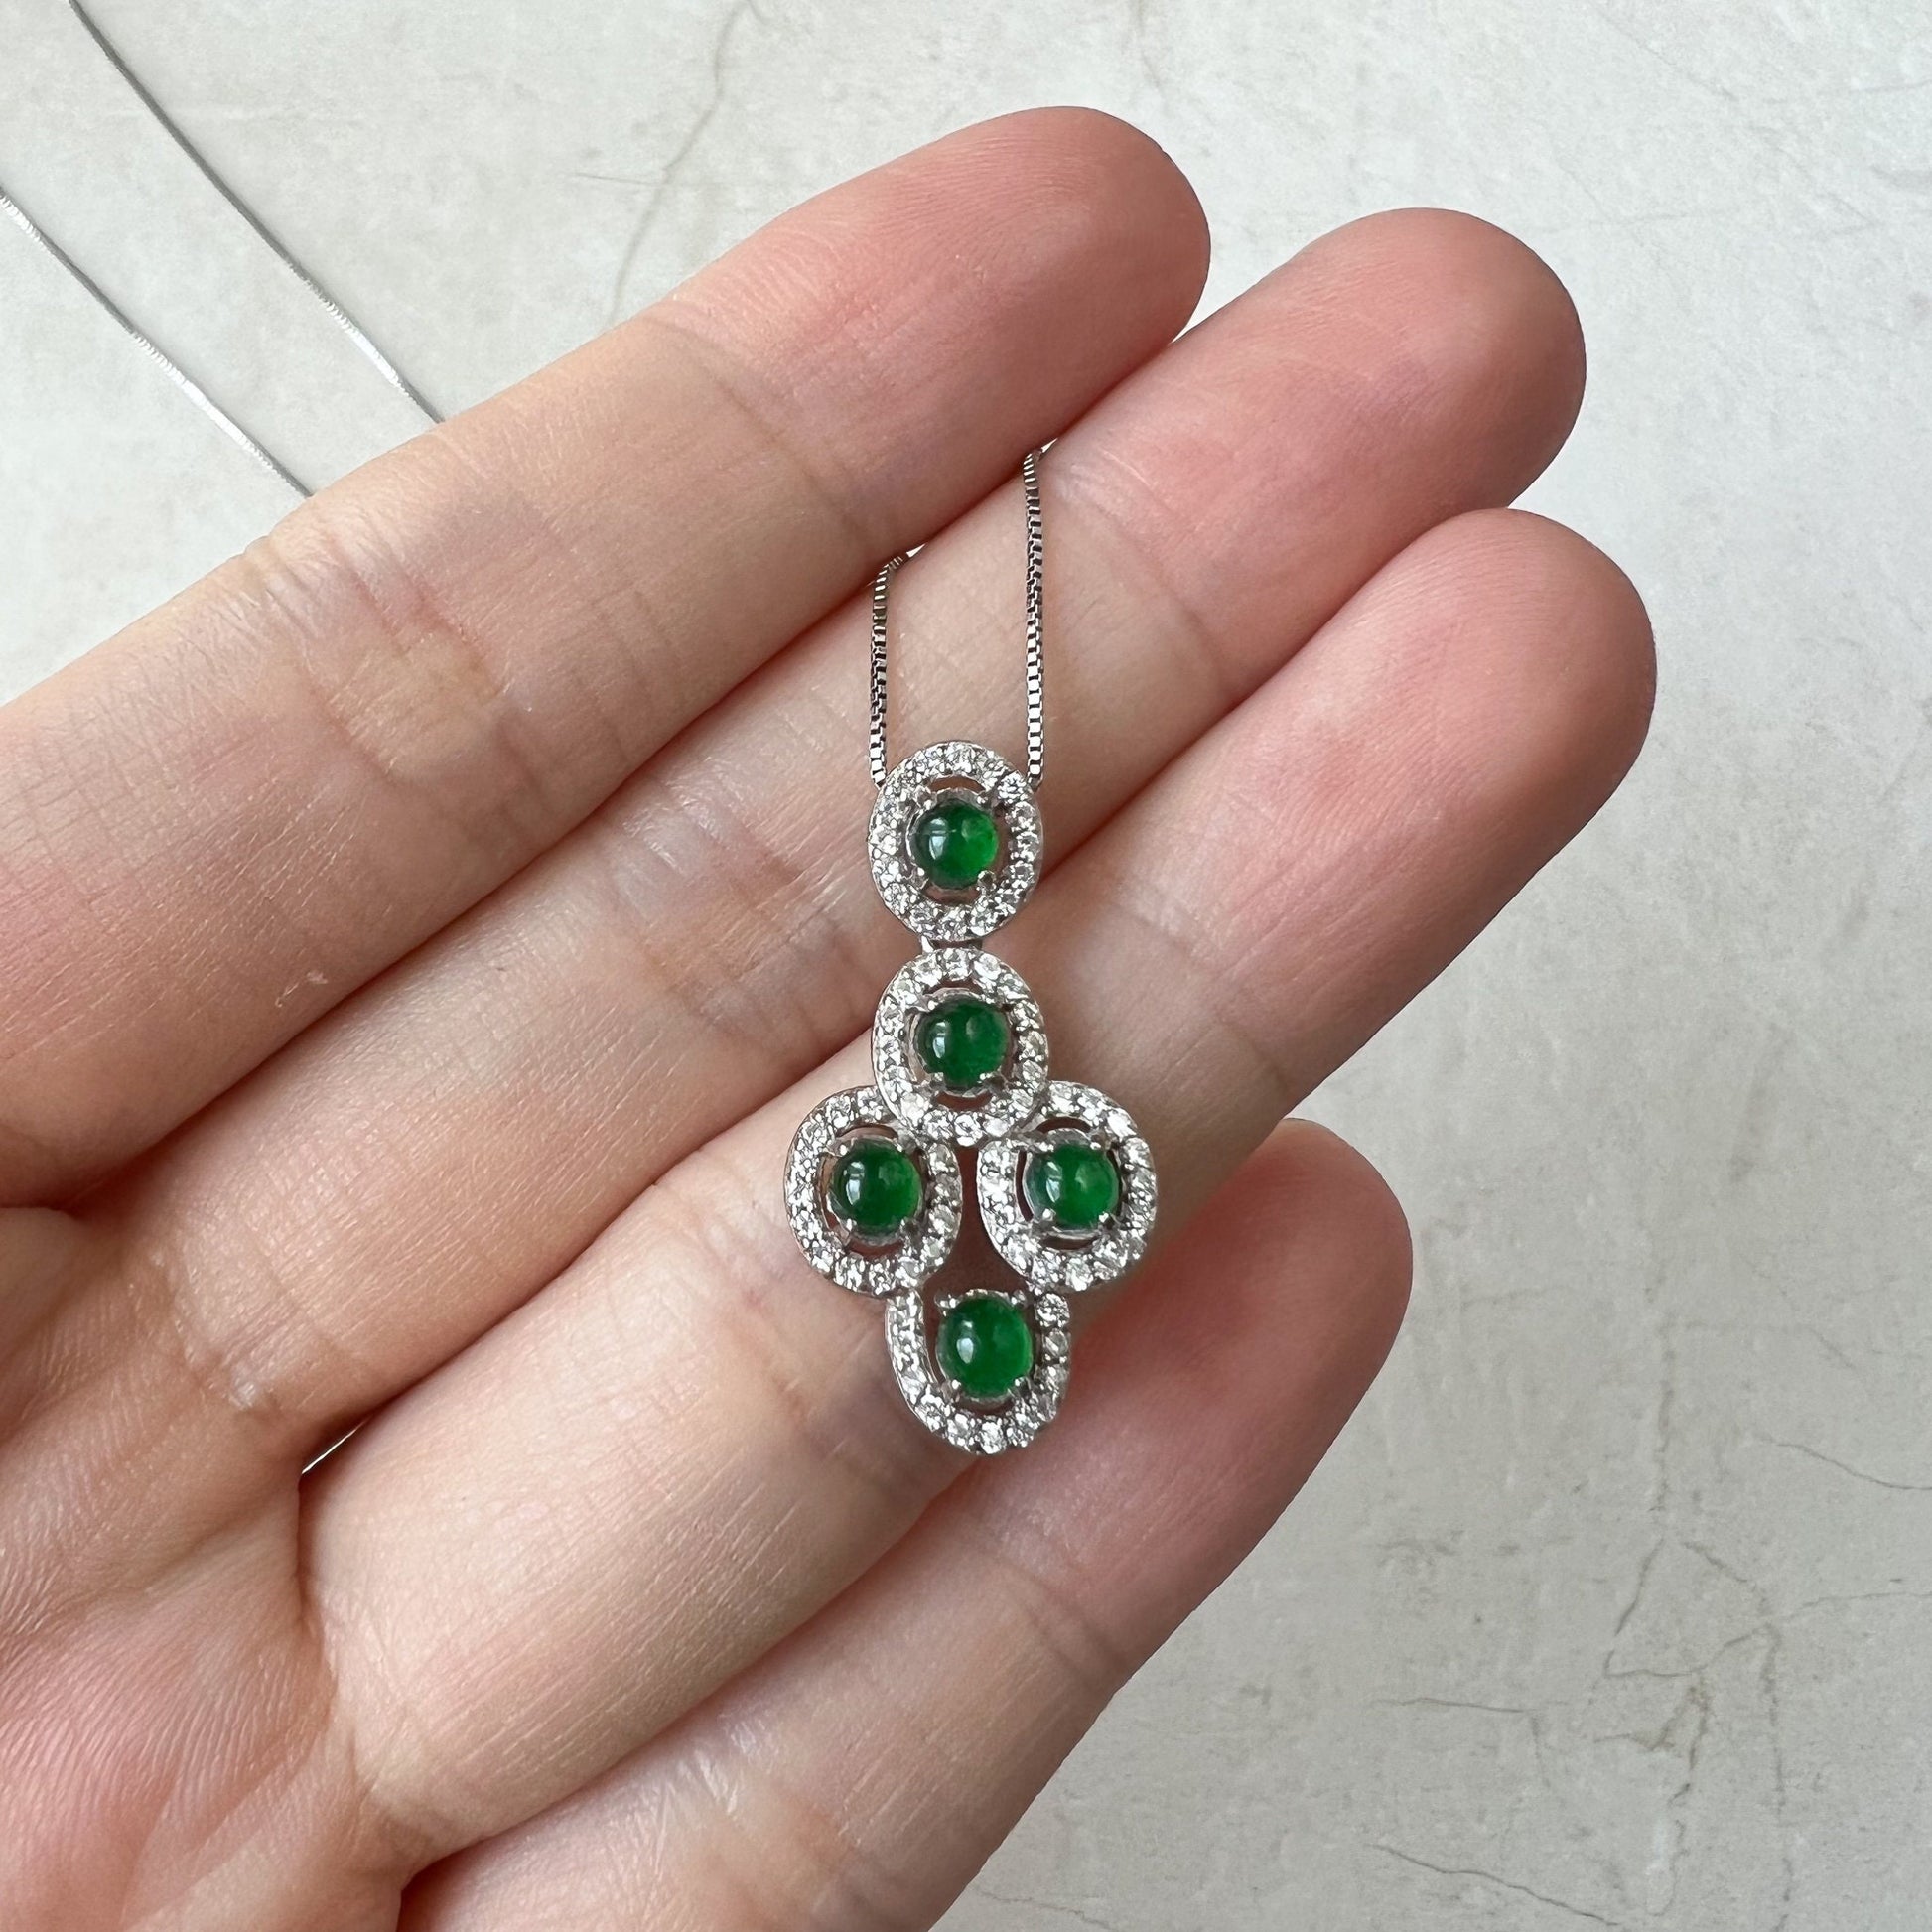 Green Jade Pendant, Jadeite Jade, Small Dainty, Sterling Silver Pendant Necklace, FDD4-1221-0021769 - AriaDesignCollection